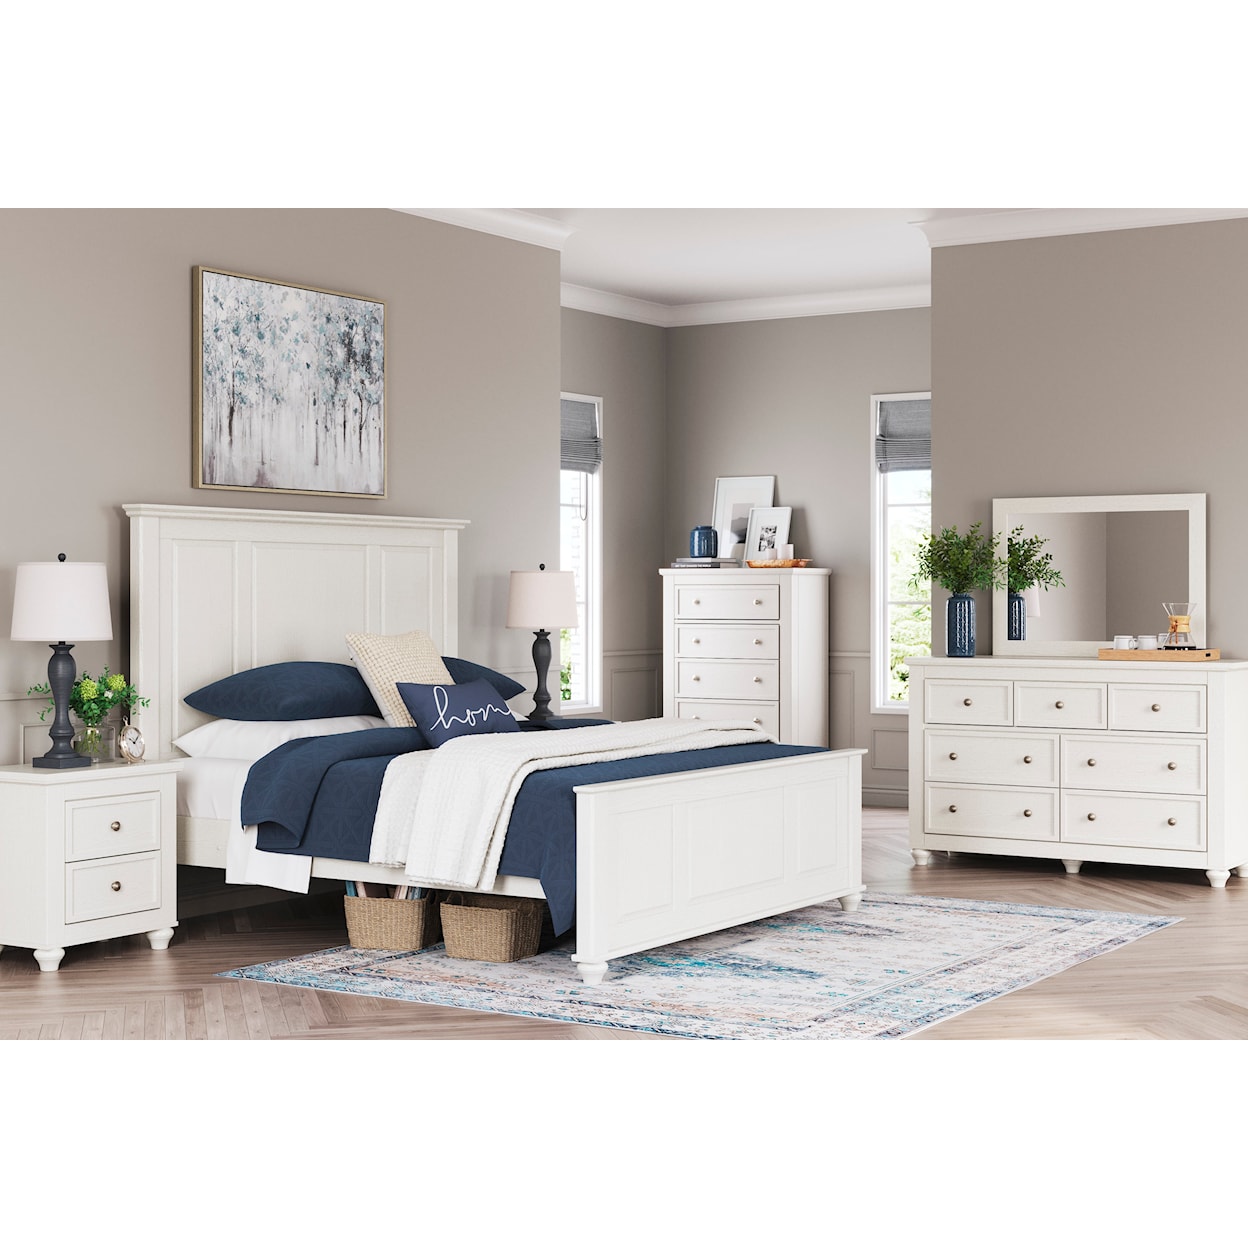 Ashley Furniture Signature Design Grantoni King Bedroom Set